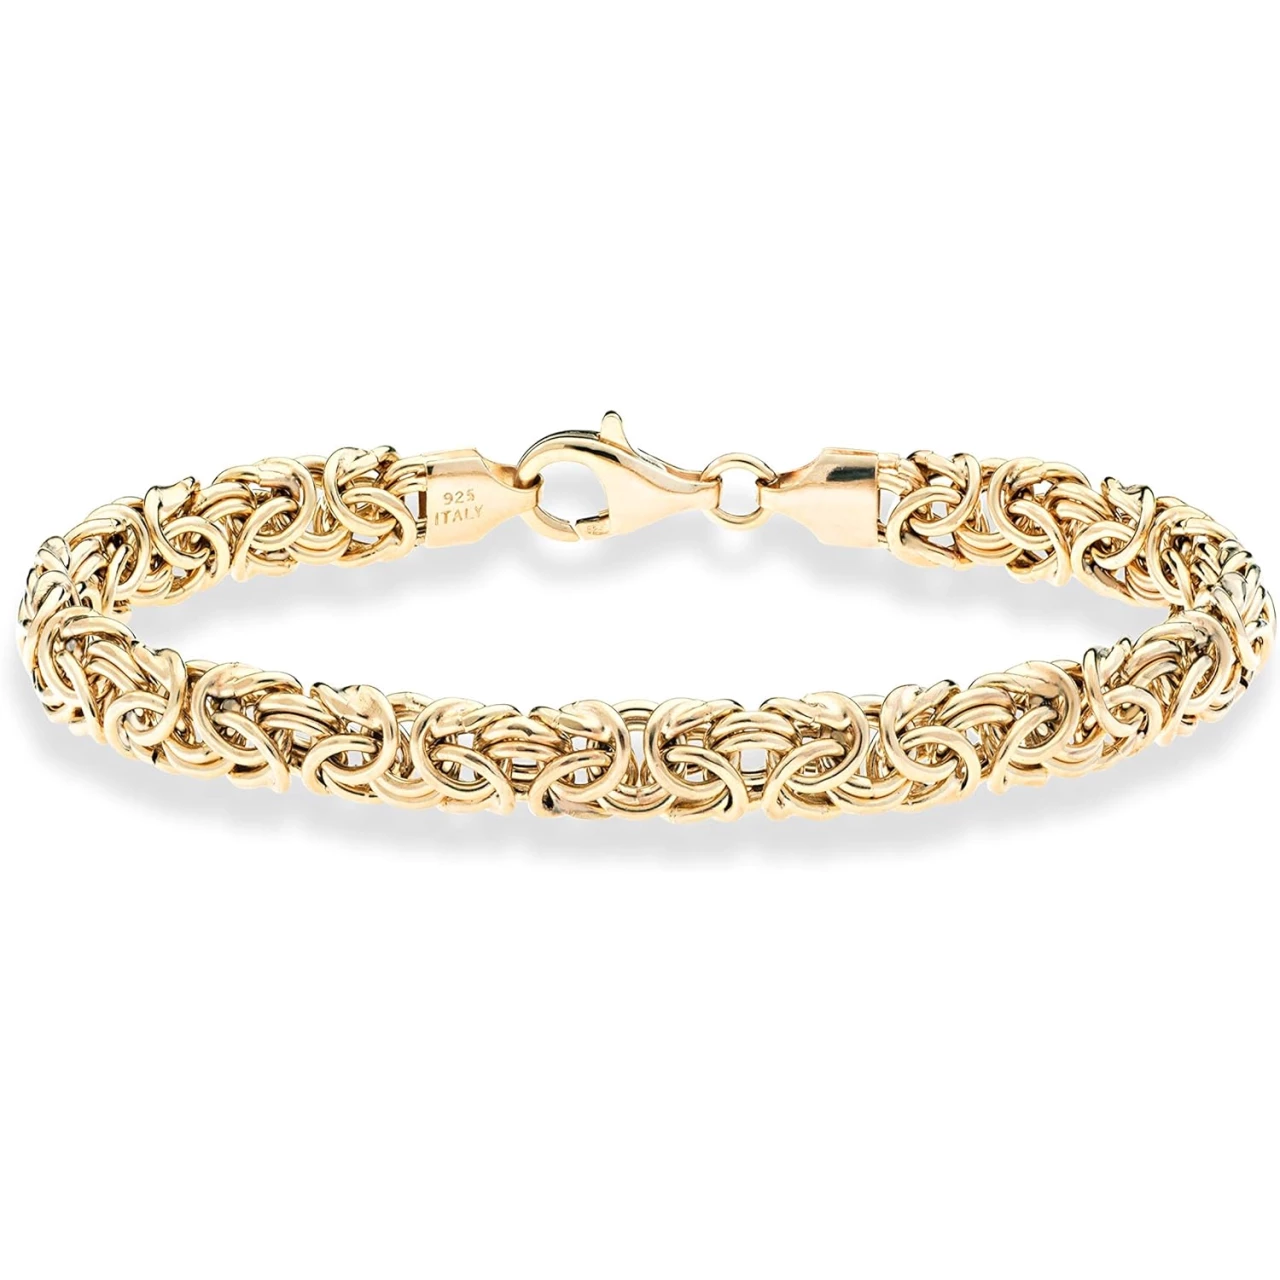 Miabella Italian 18K Gold Over Sterling Silver Byzantine Bracelet for Women, Handmade in Italy